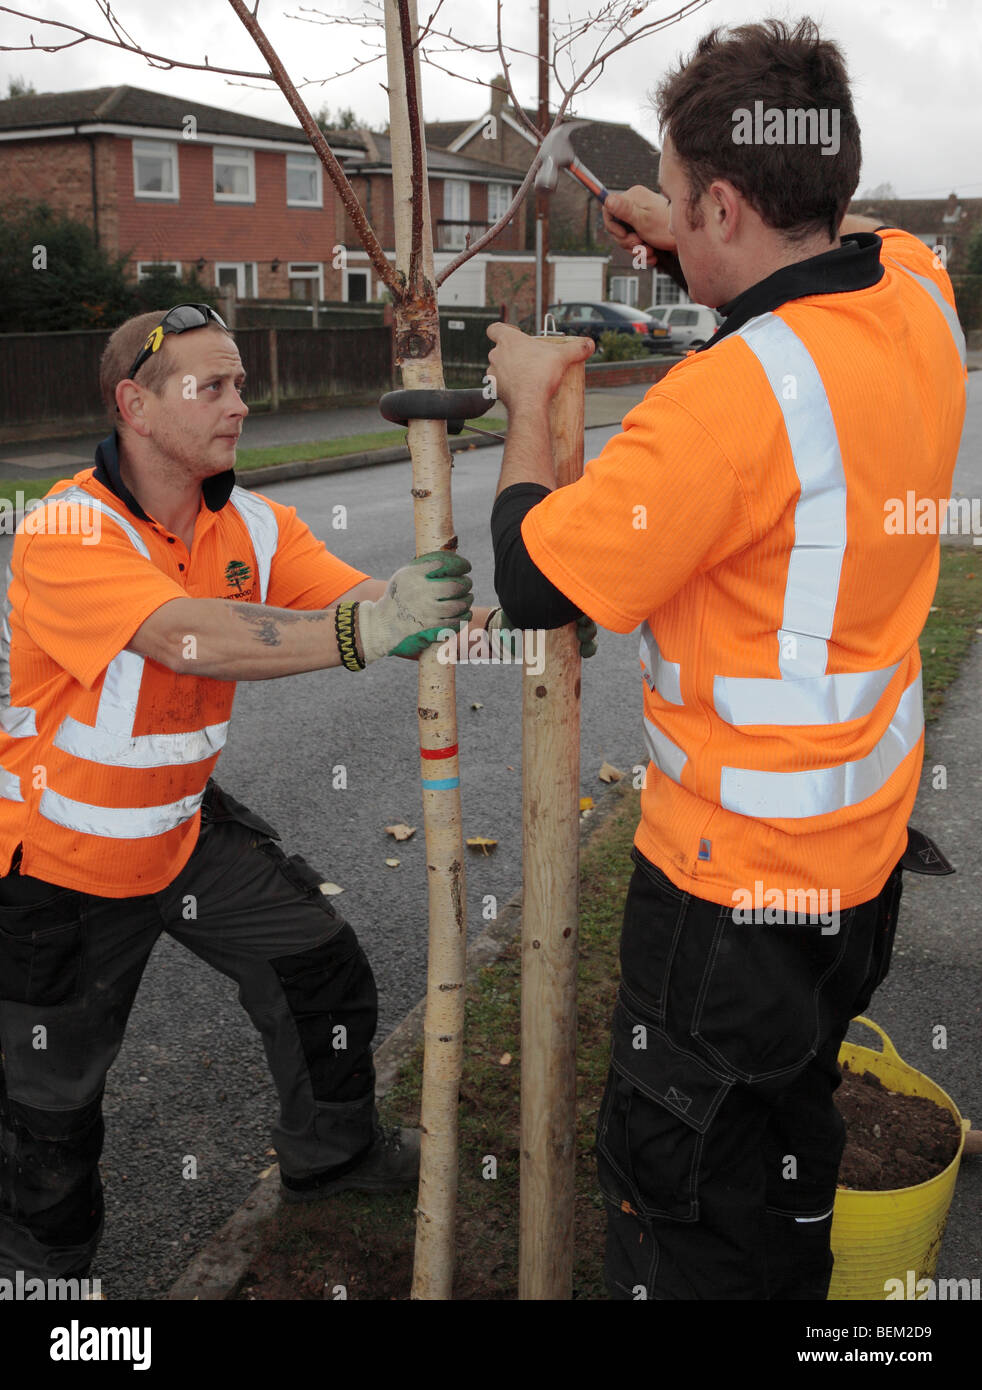 Men planting a tree in a suburban street. Stock Photo